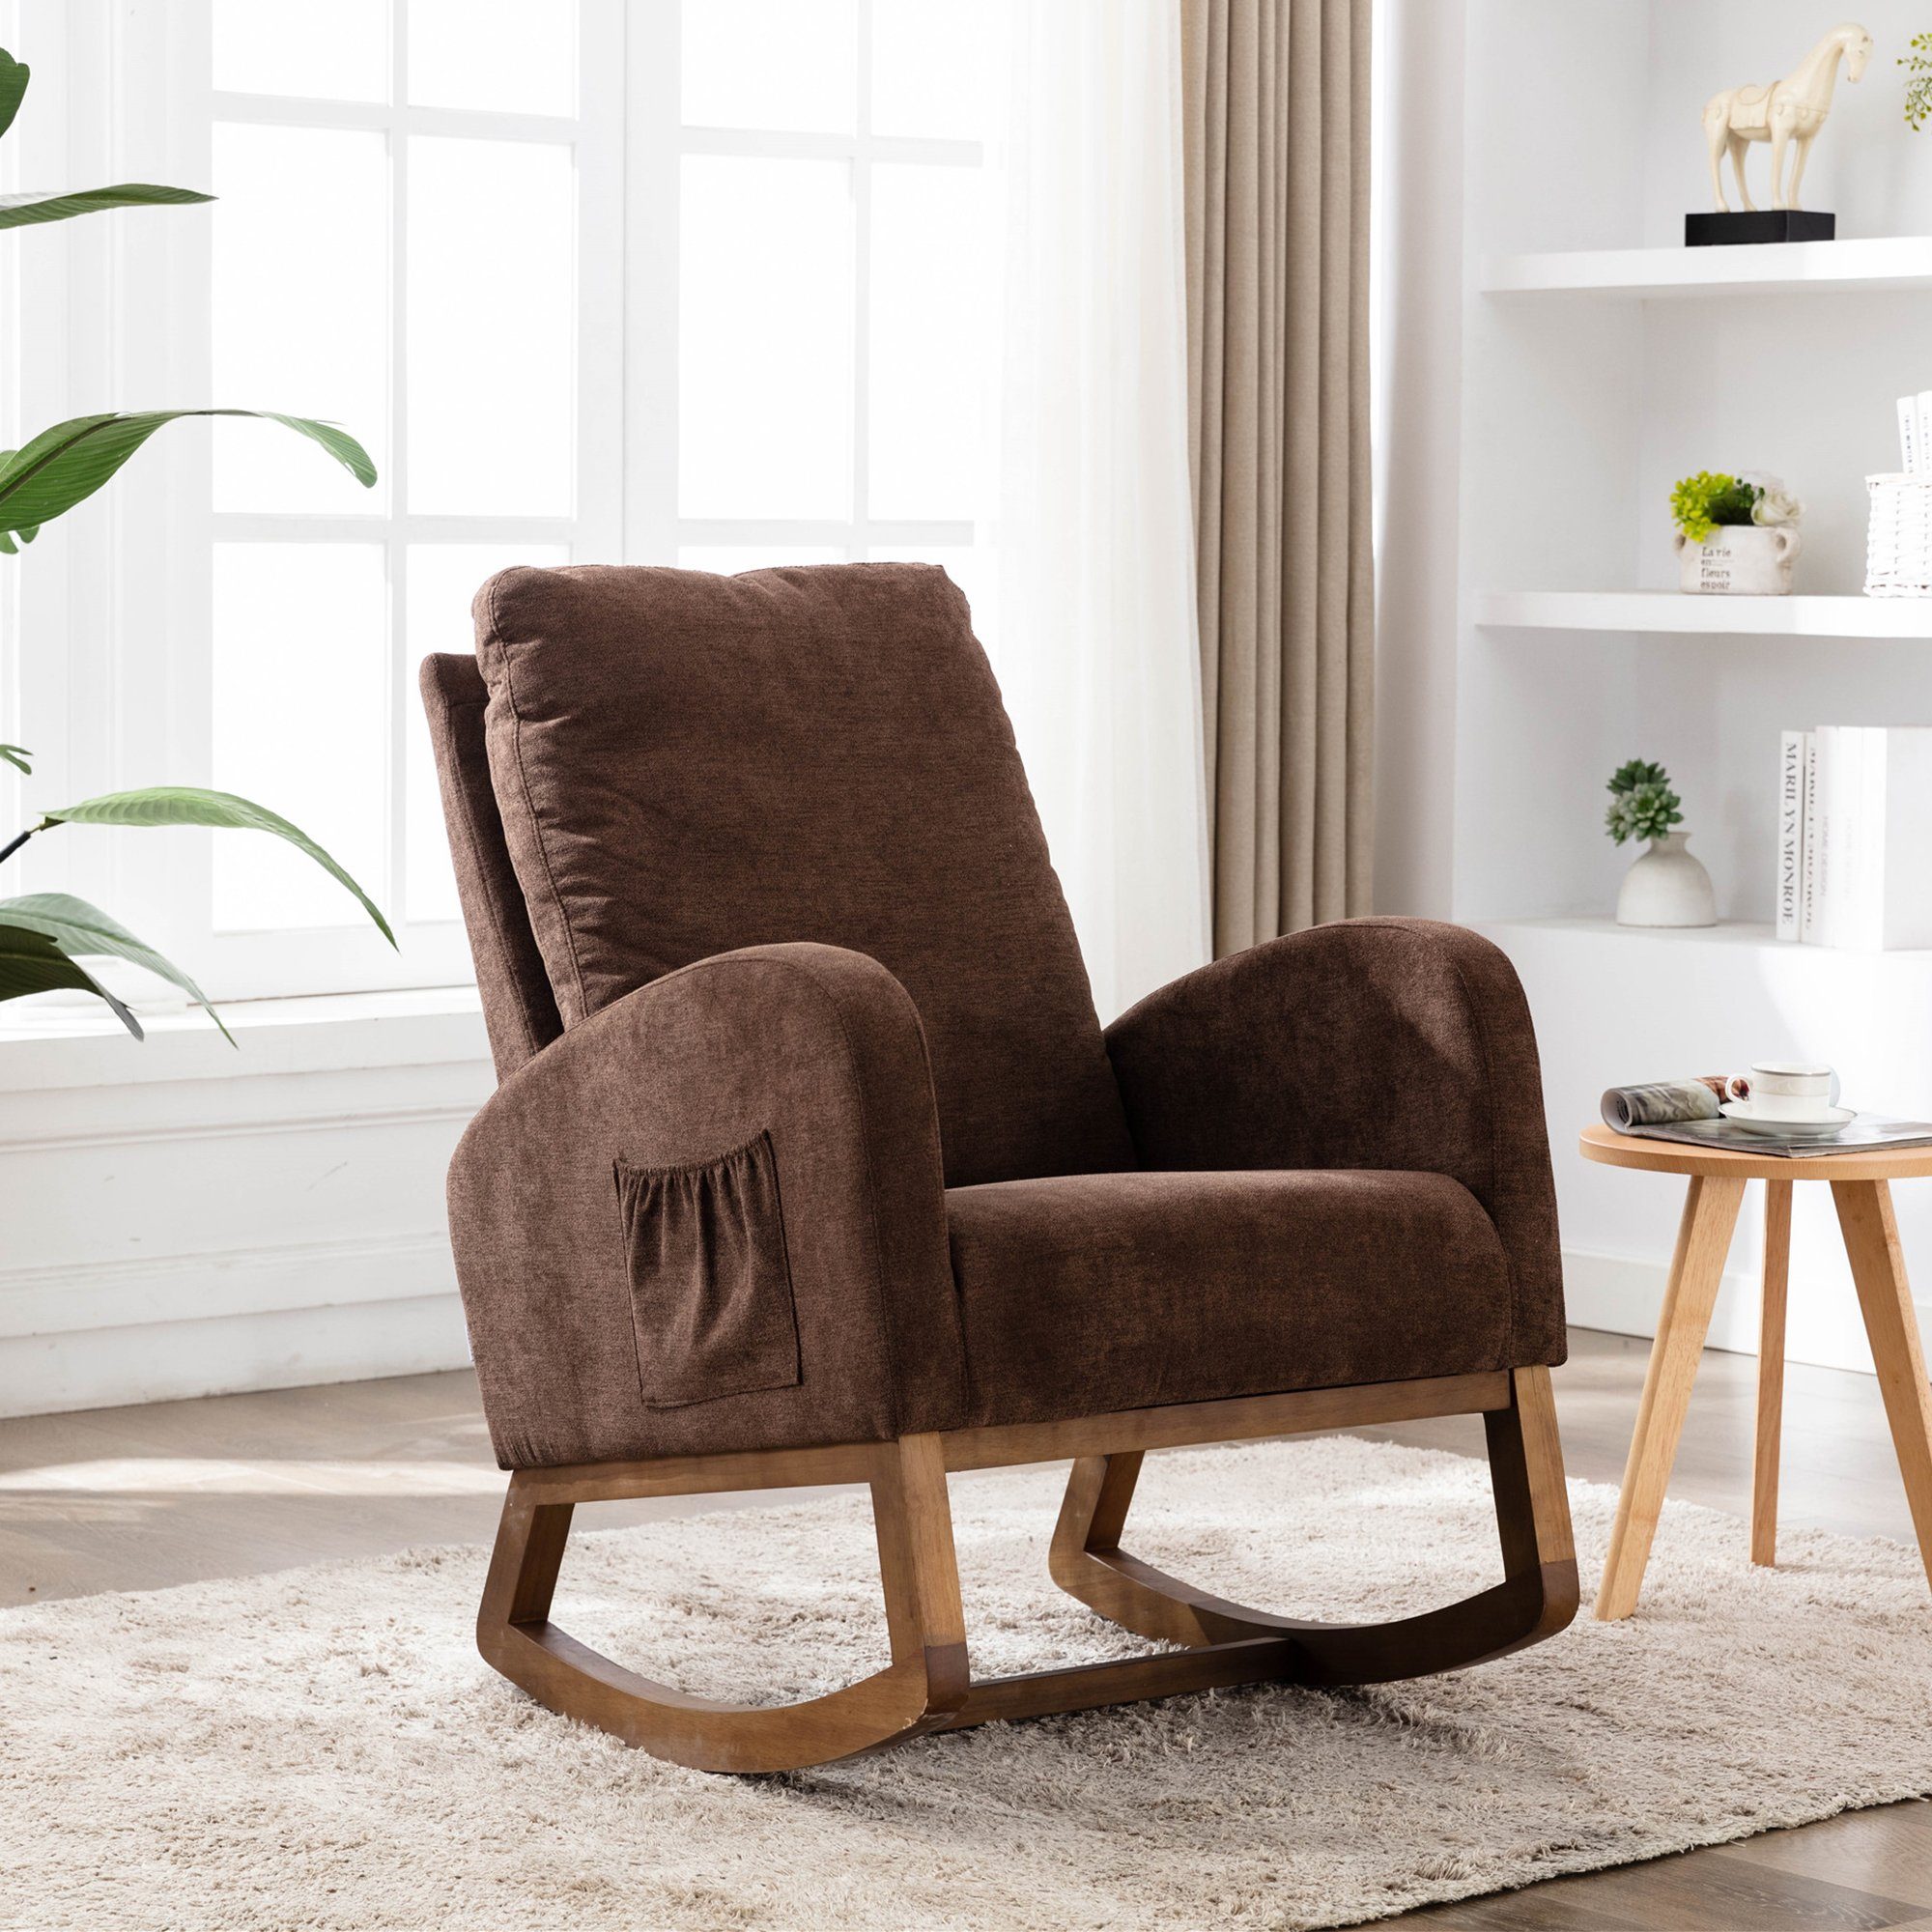 BOTC Schaukelsessel Schwingsessel Relaxstuhl Living room Comfortable rocking chair